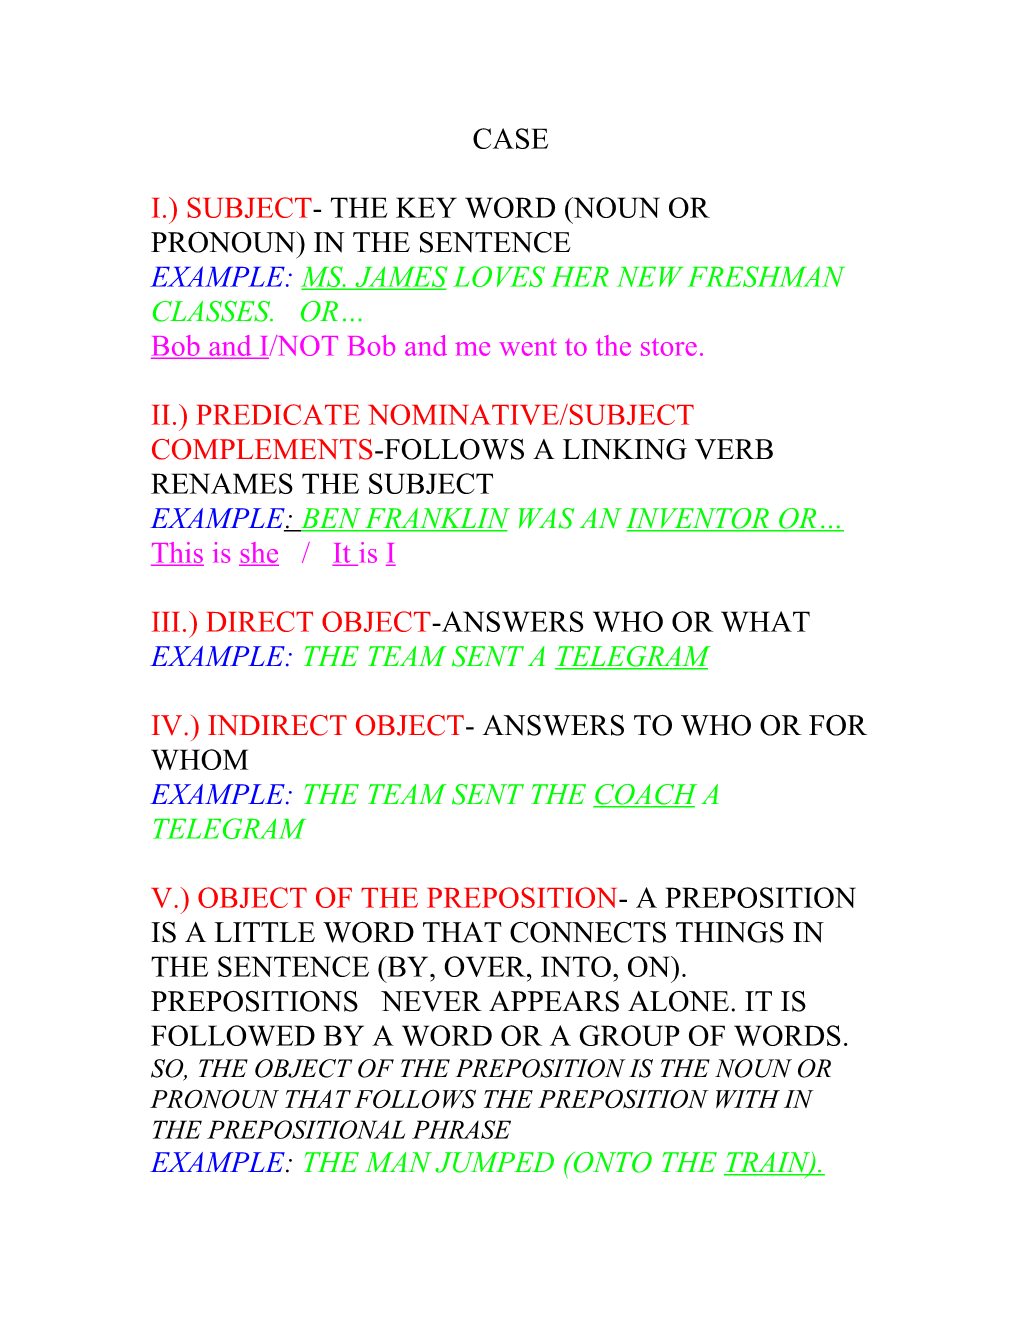 Subject- the Key Word(Noun Or Pronoun) in the Sentence